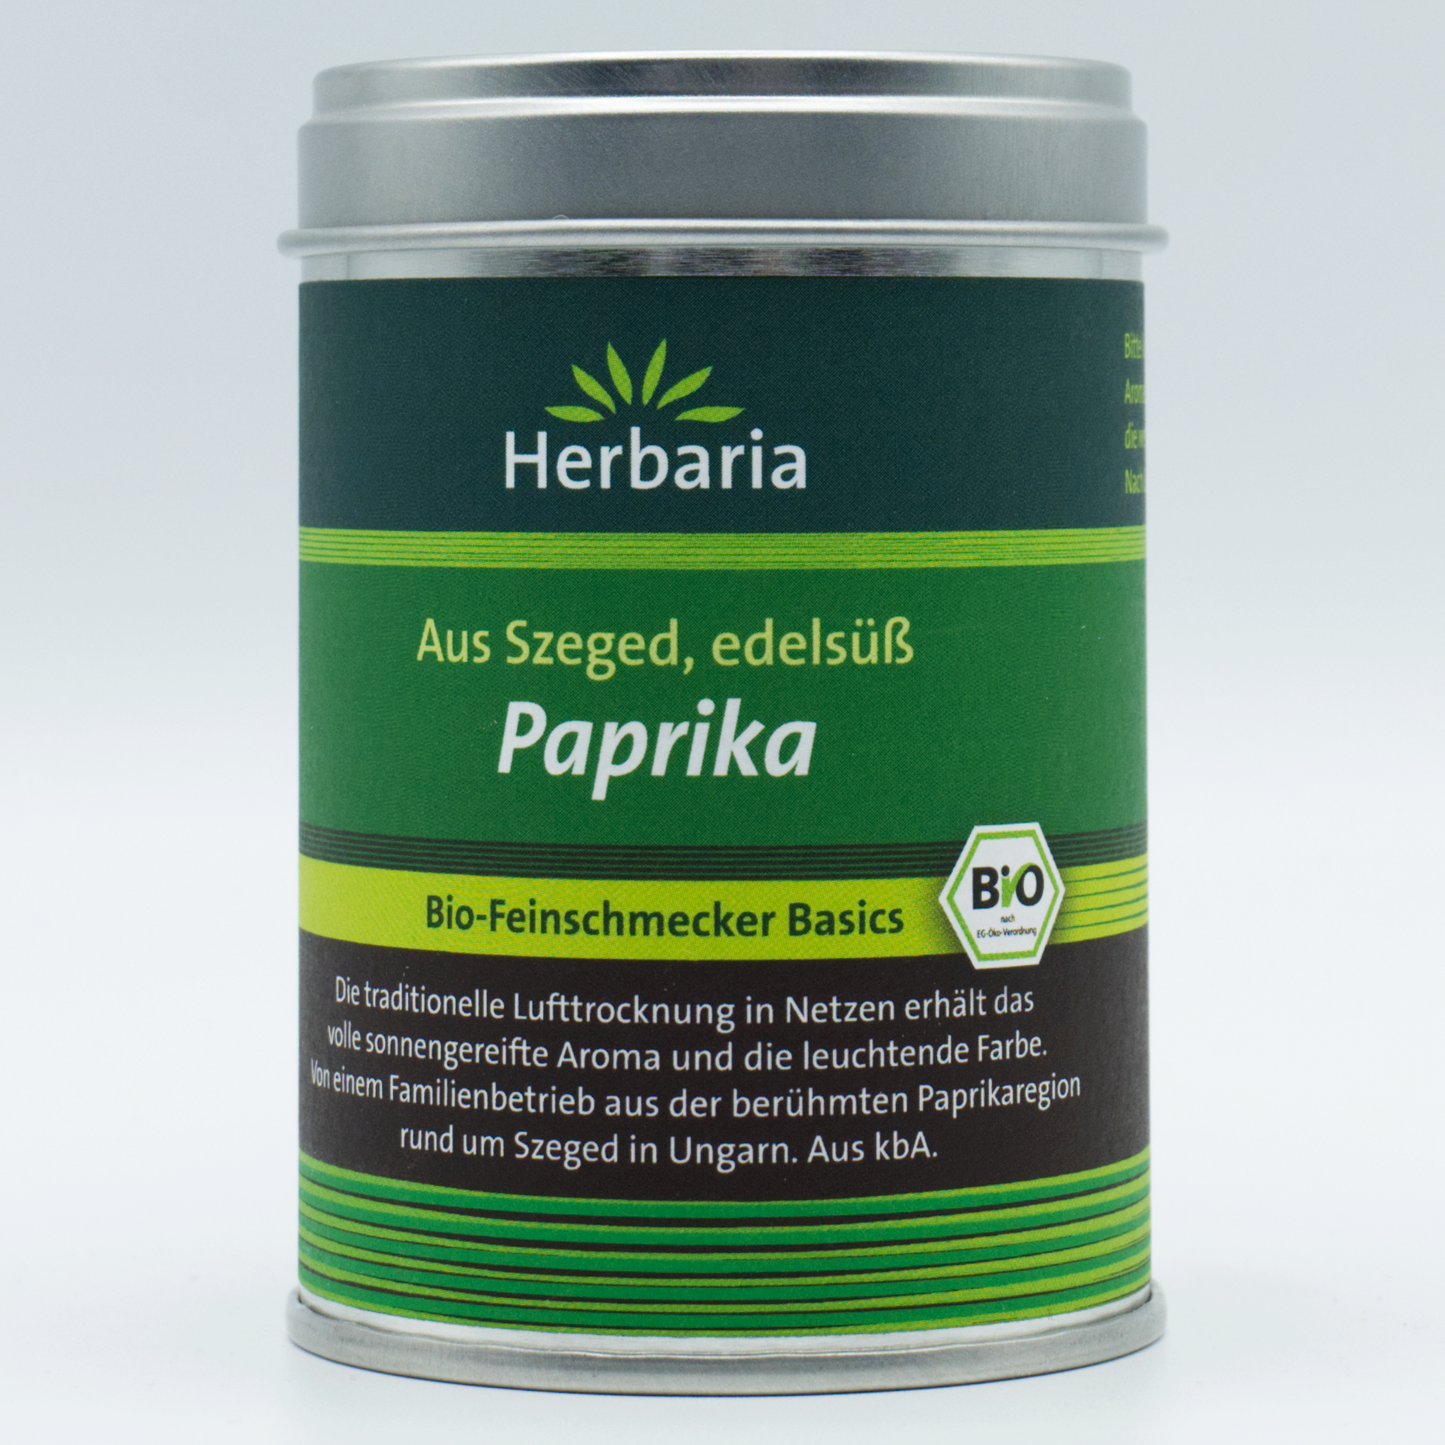 Herbaria Paprika edelsüss, 1er Pack (1 x 80 g Dose) - Bio